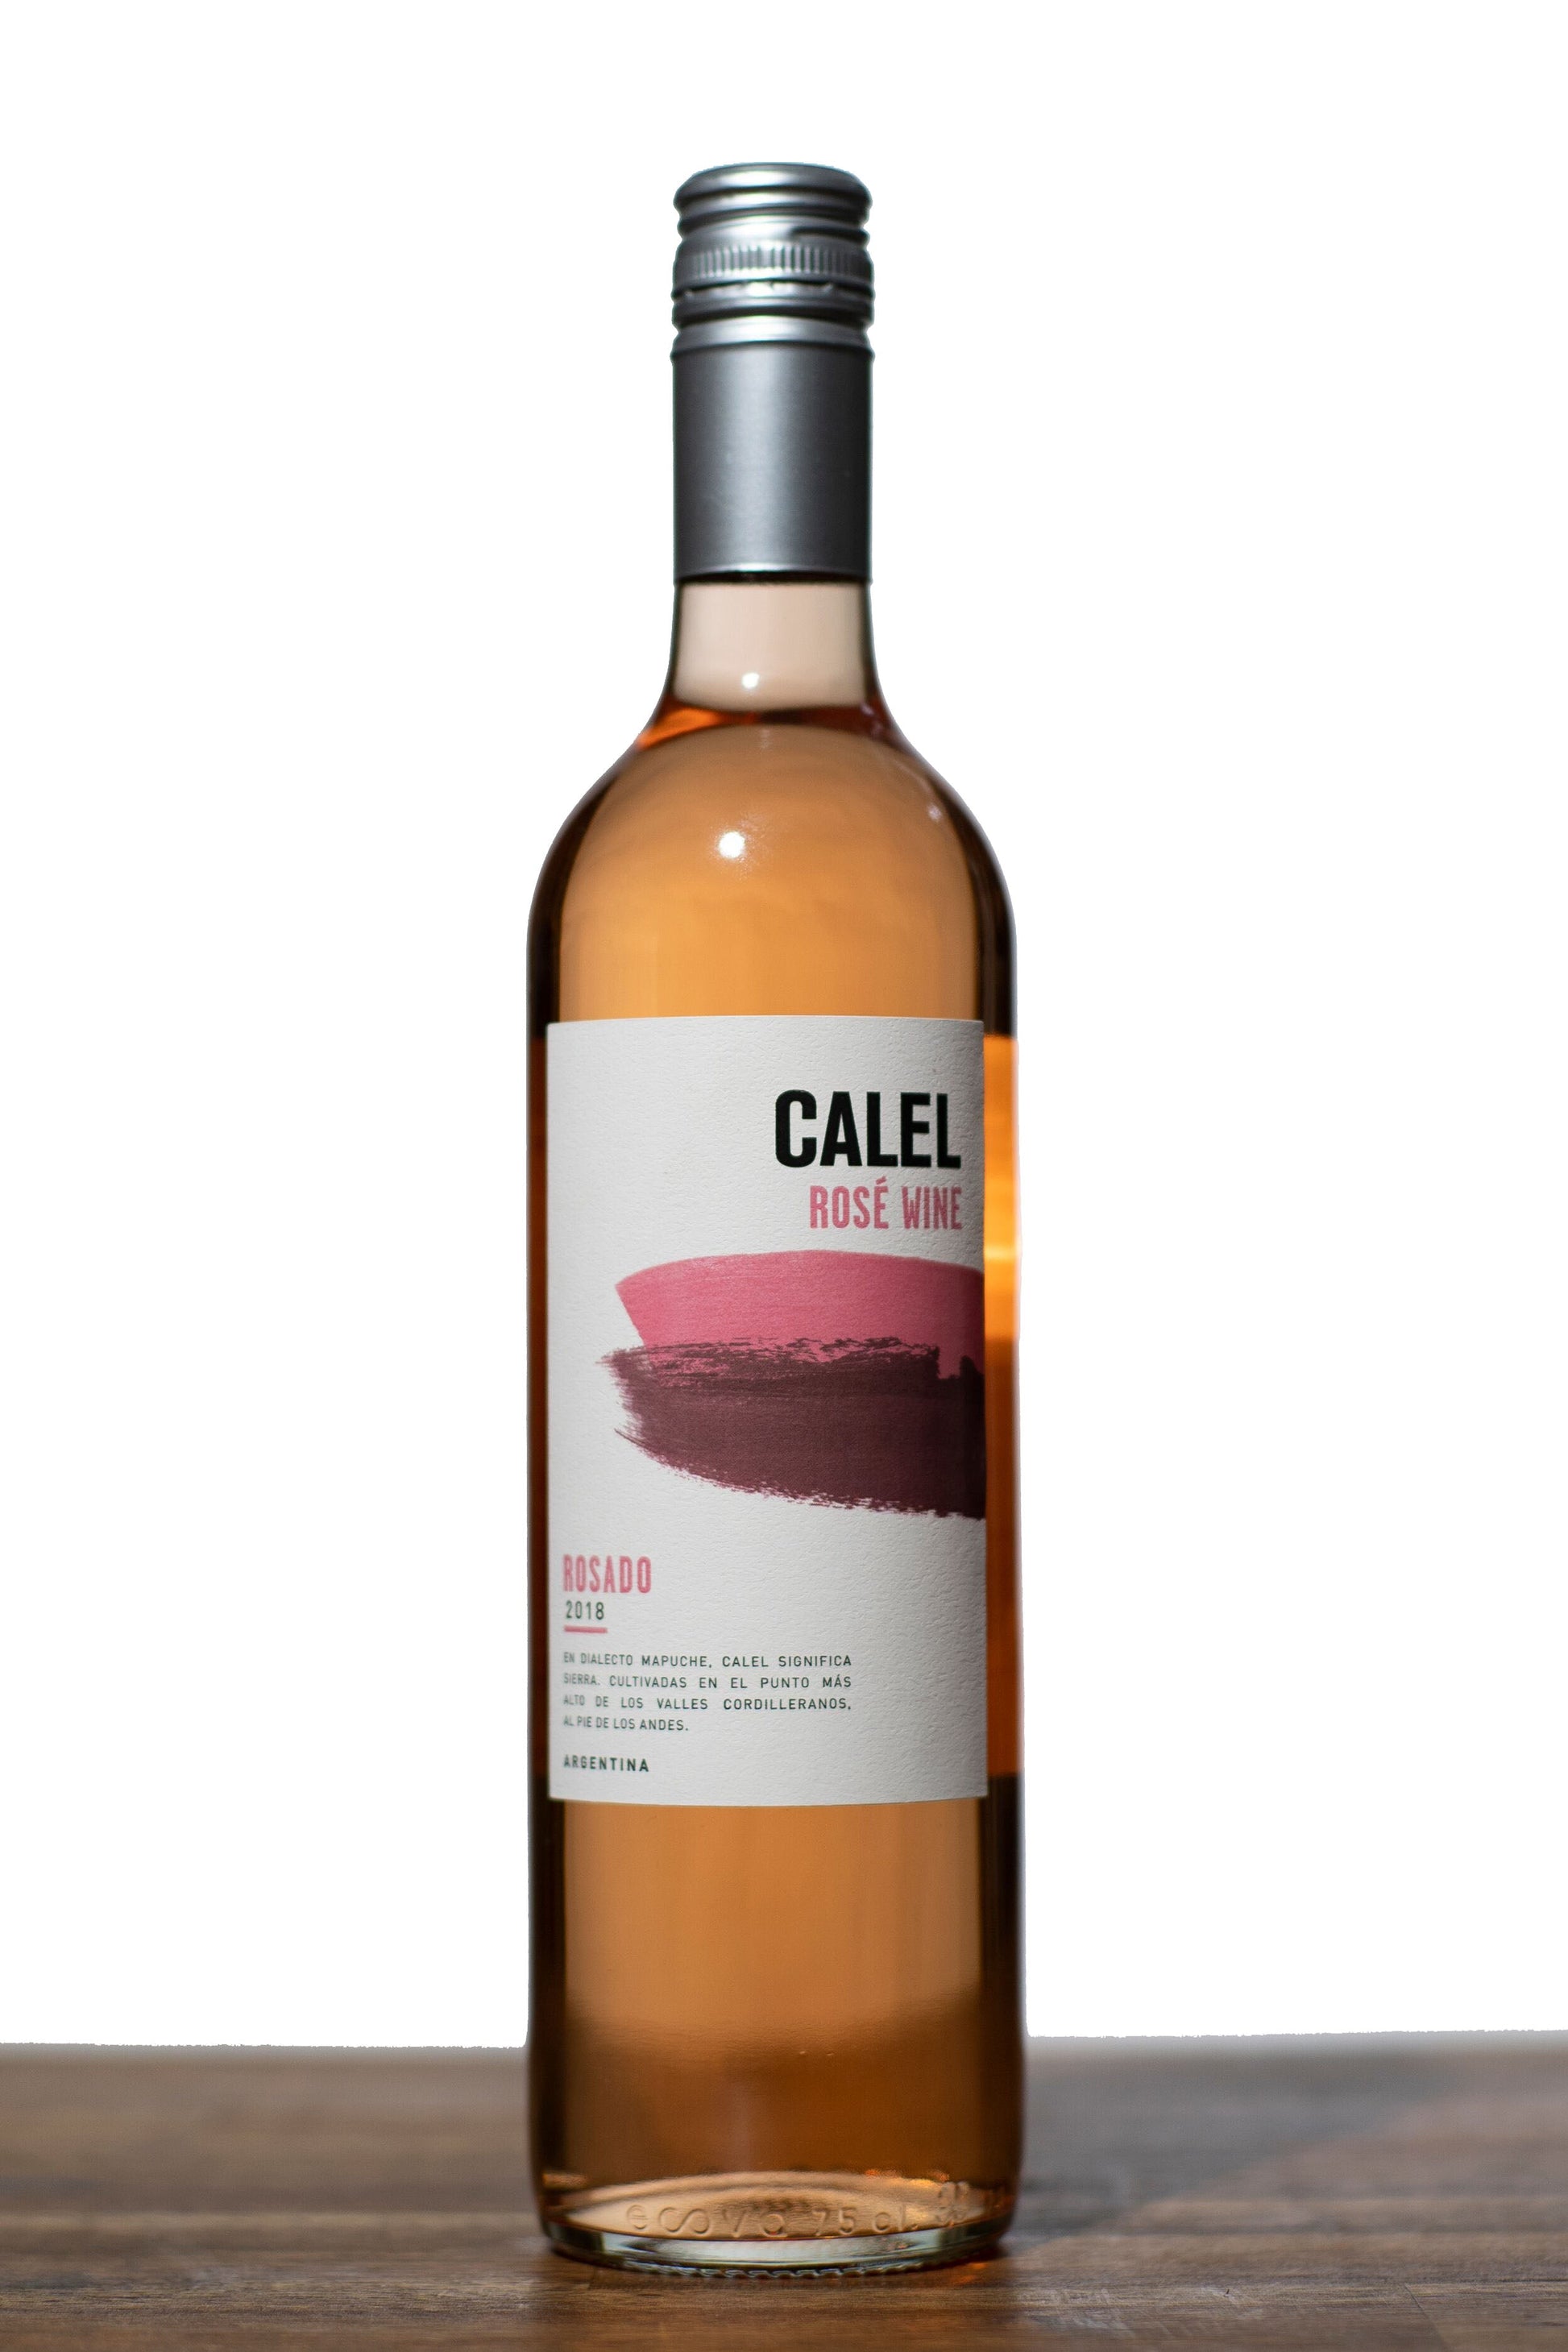 Calel Rose Wine 2018 (Sold -Out) - Premium Red wine from San Telmo Cellars - Just $18.90! Shop now at San Telmo Cellars